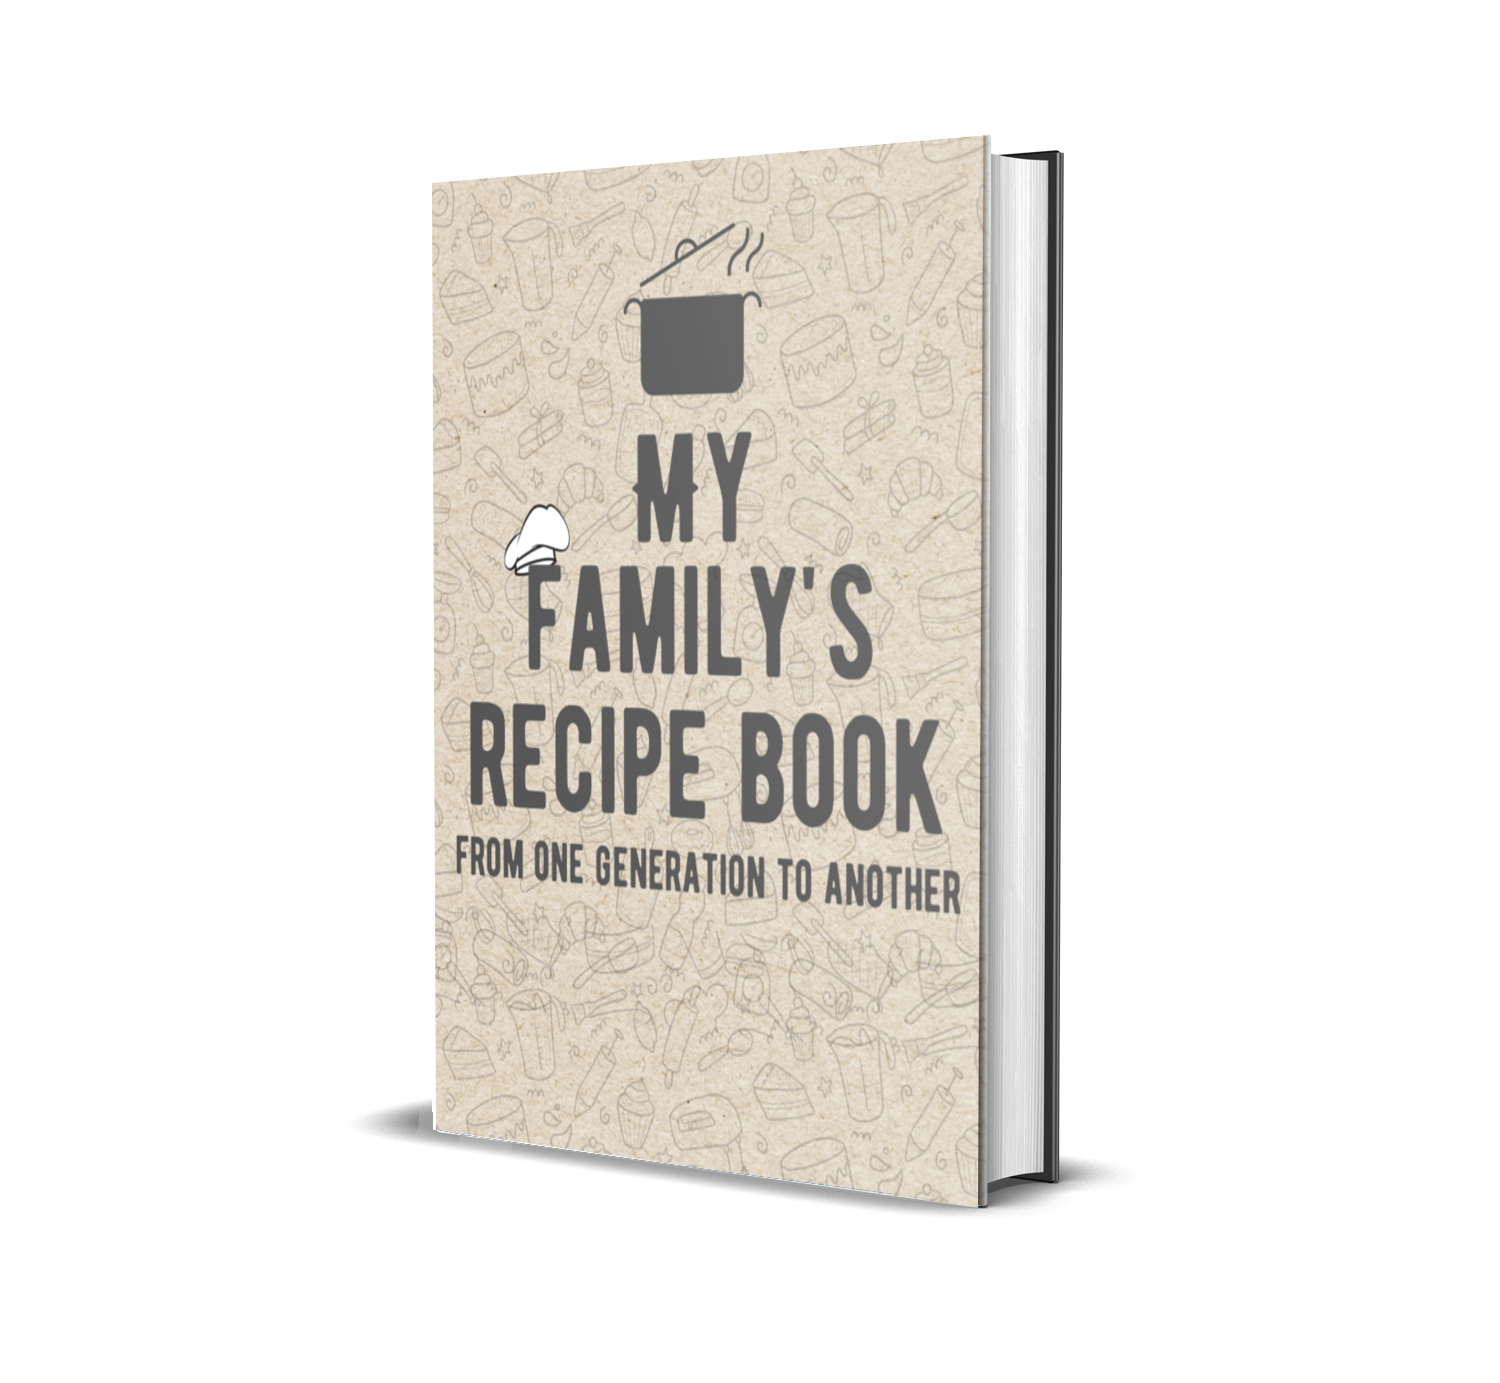 Nana's Recipes: A fill-in recipe book for family favorites